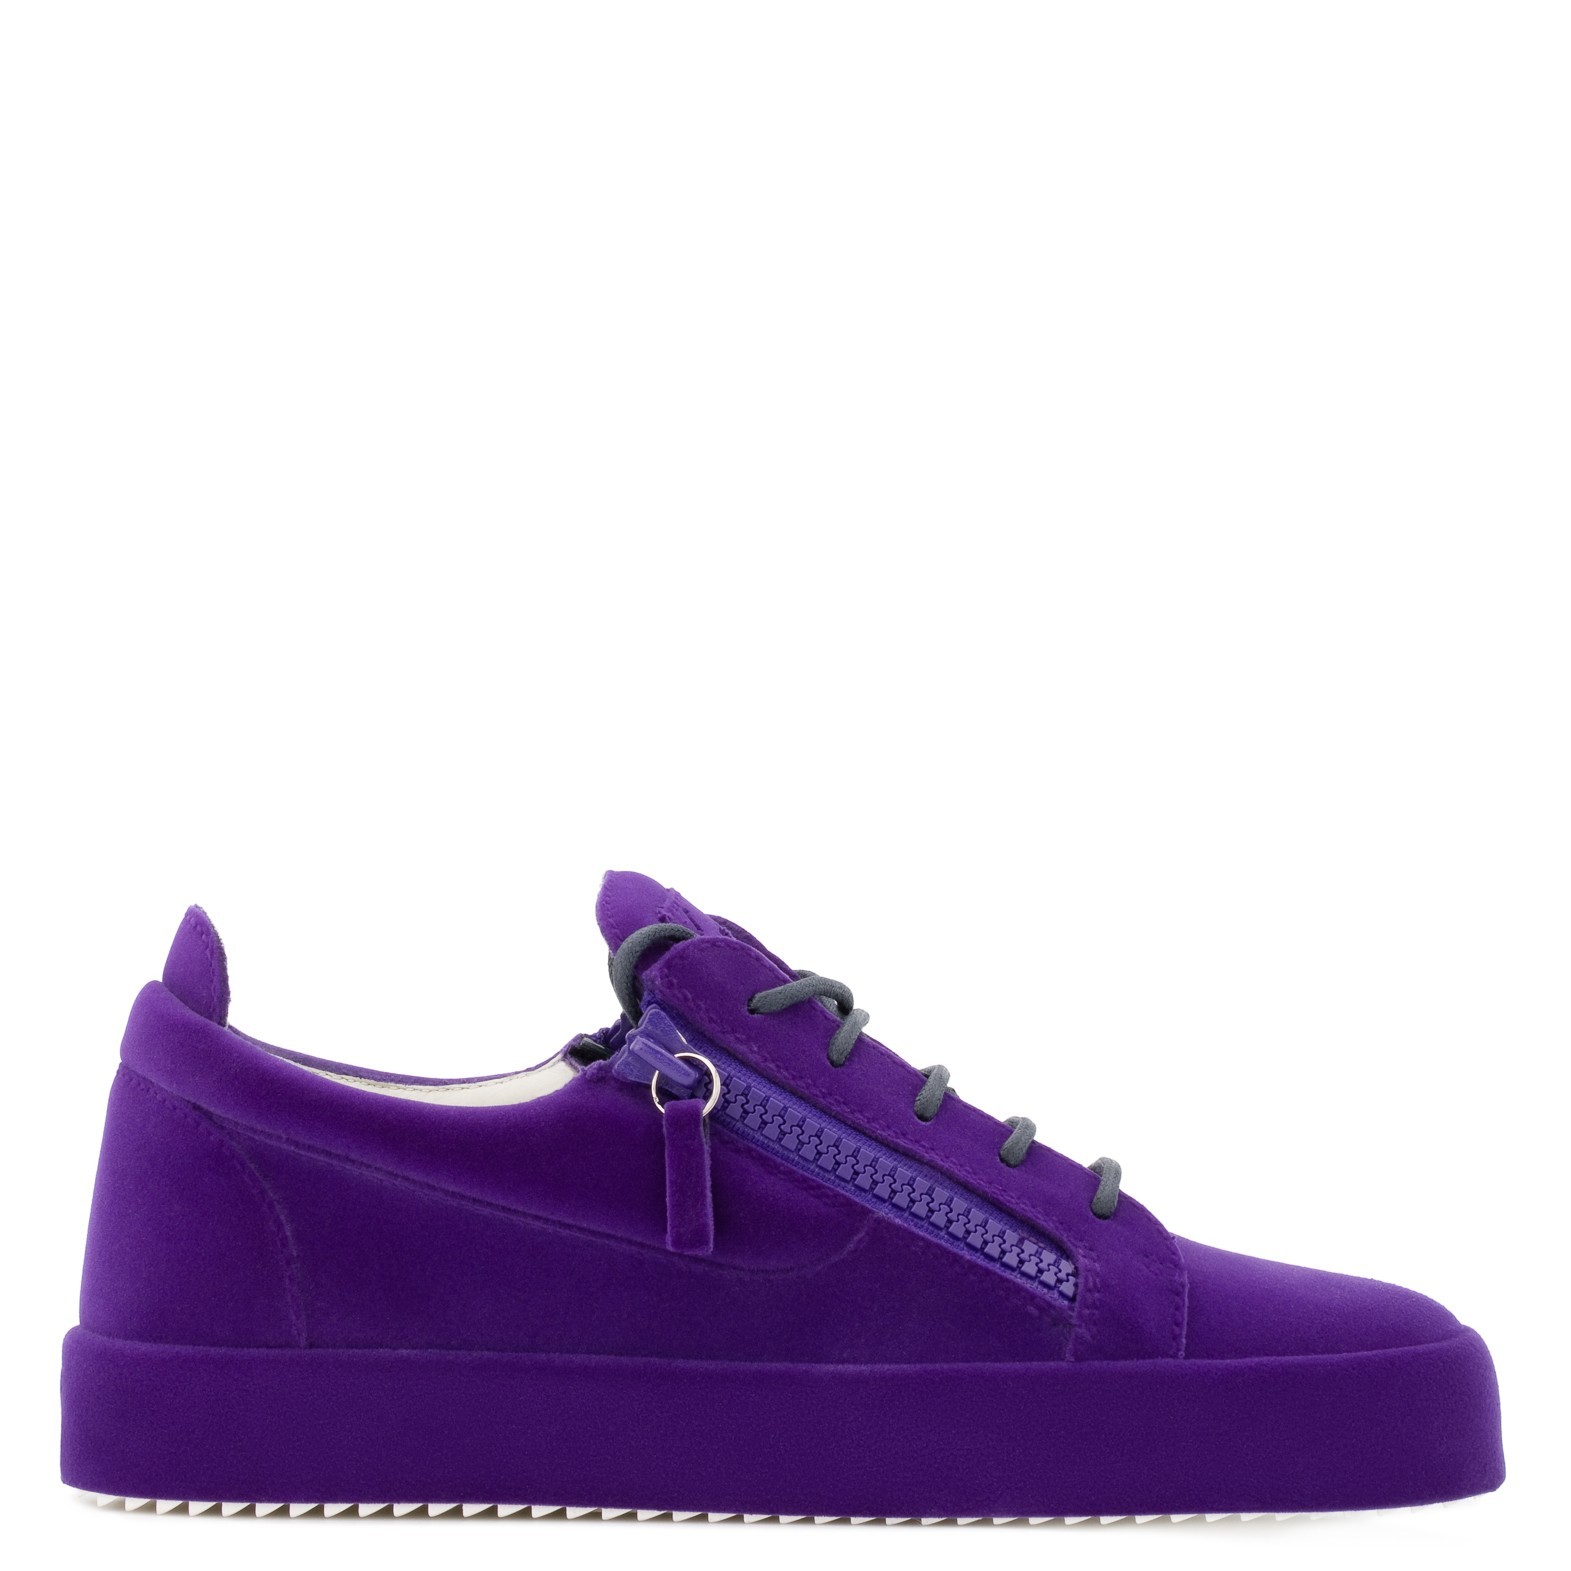 purple leather sneakers